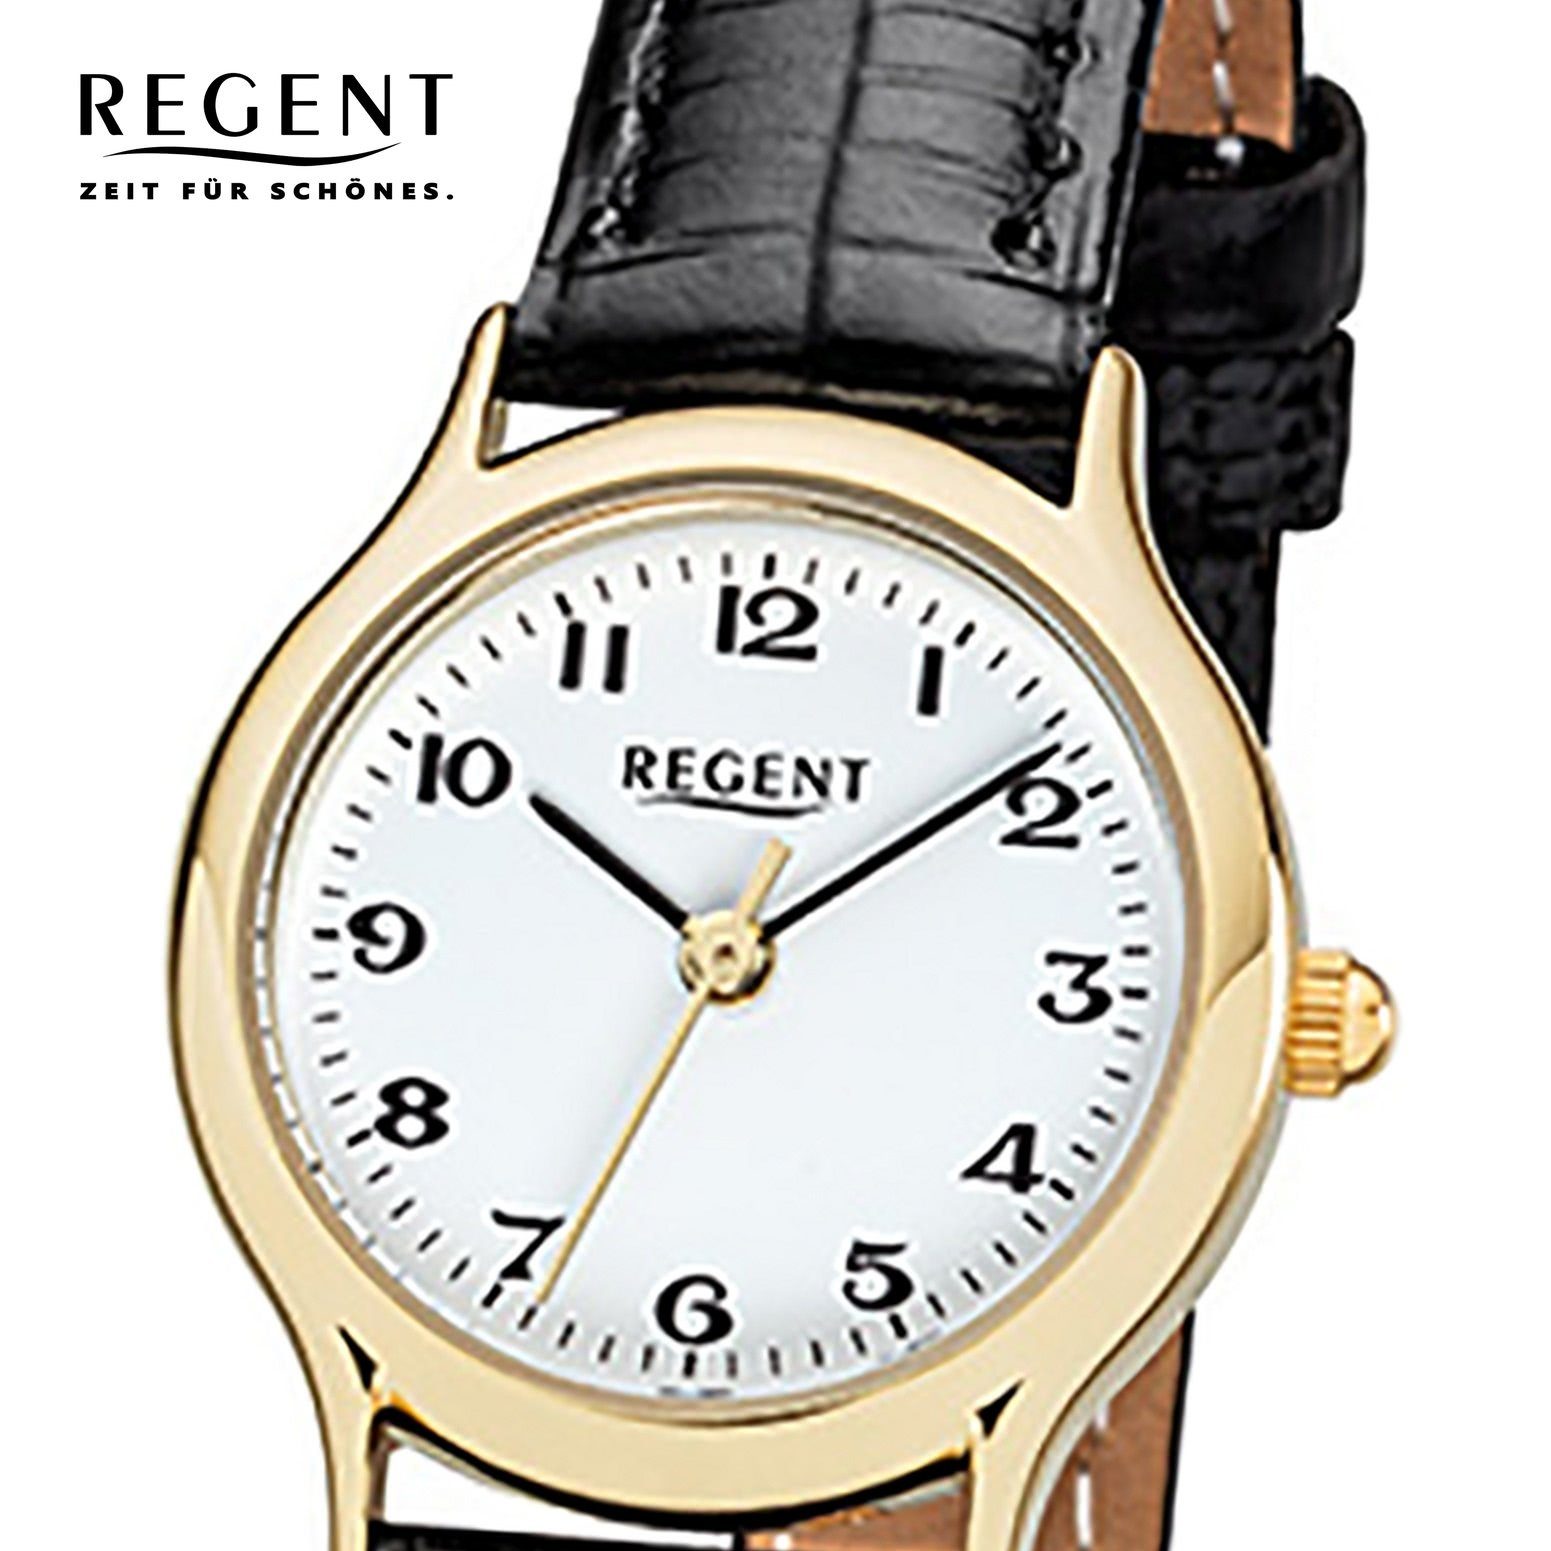 Regent Quarzuhr Regent Damen-Armbanduhr Lederarmband 24mm), Analog, rund, Damen schwarz (ca. Armbanduhr klein